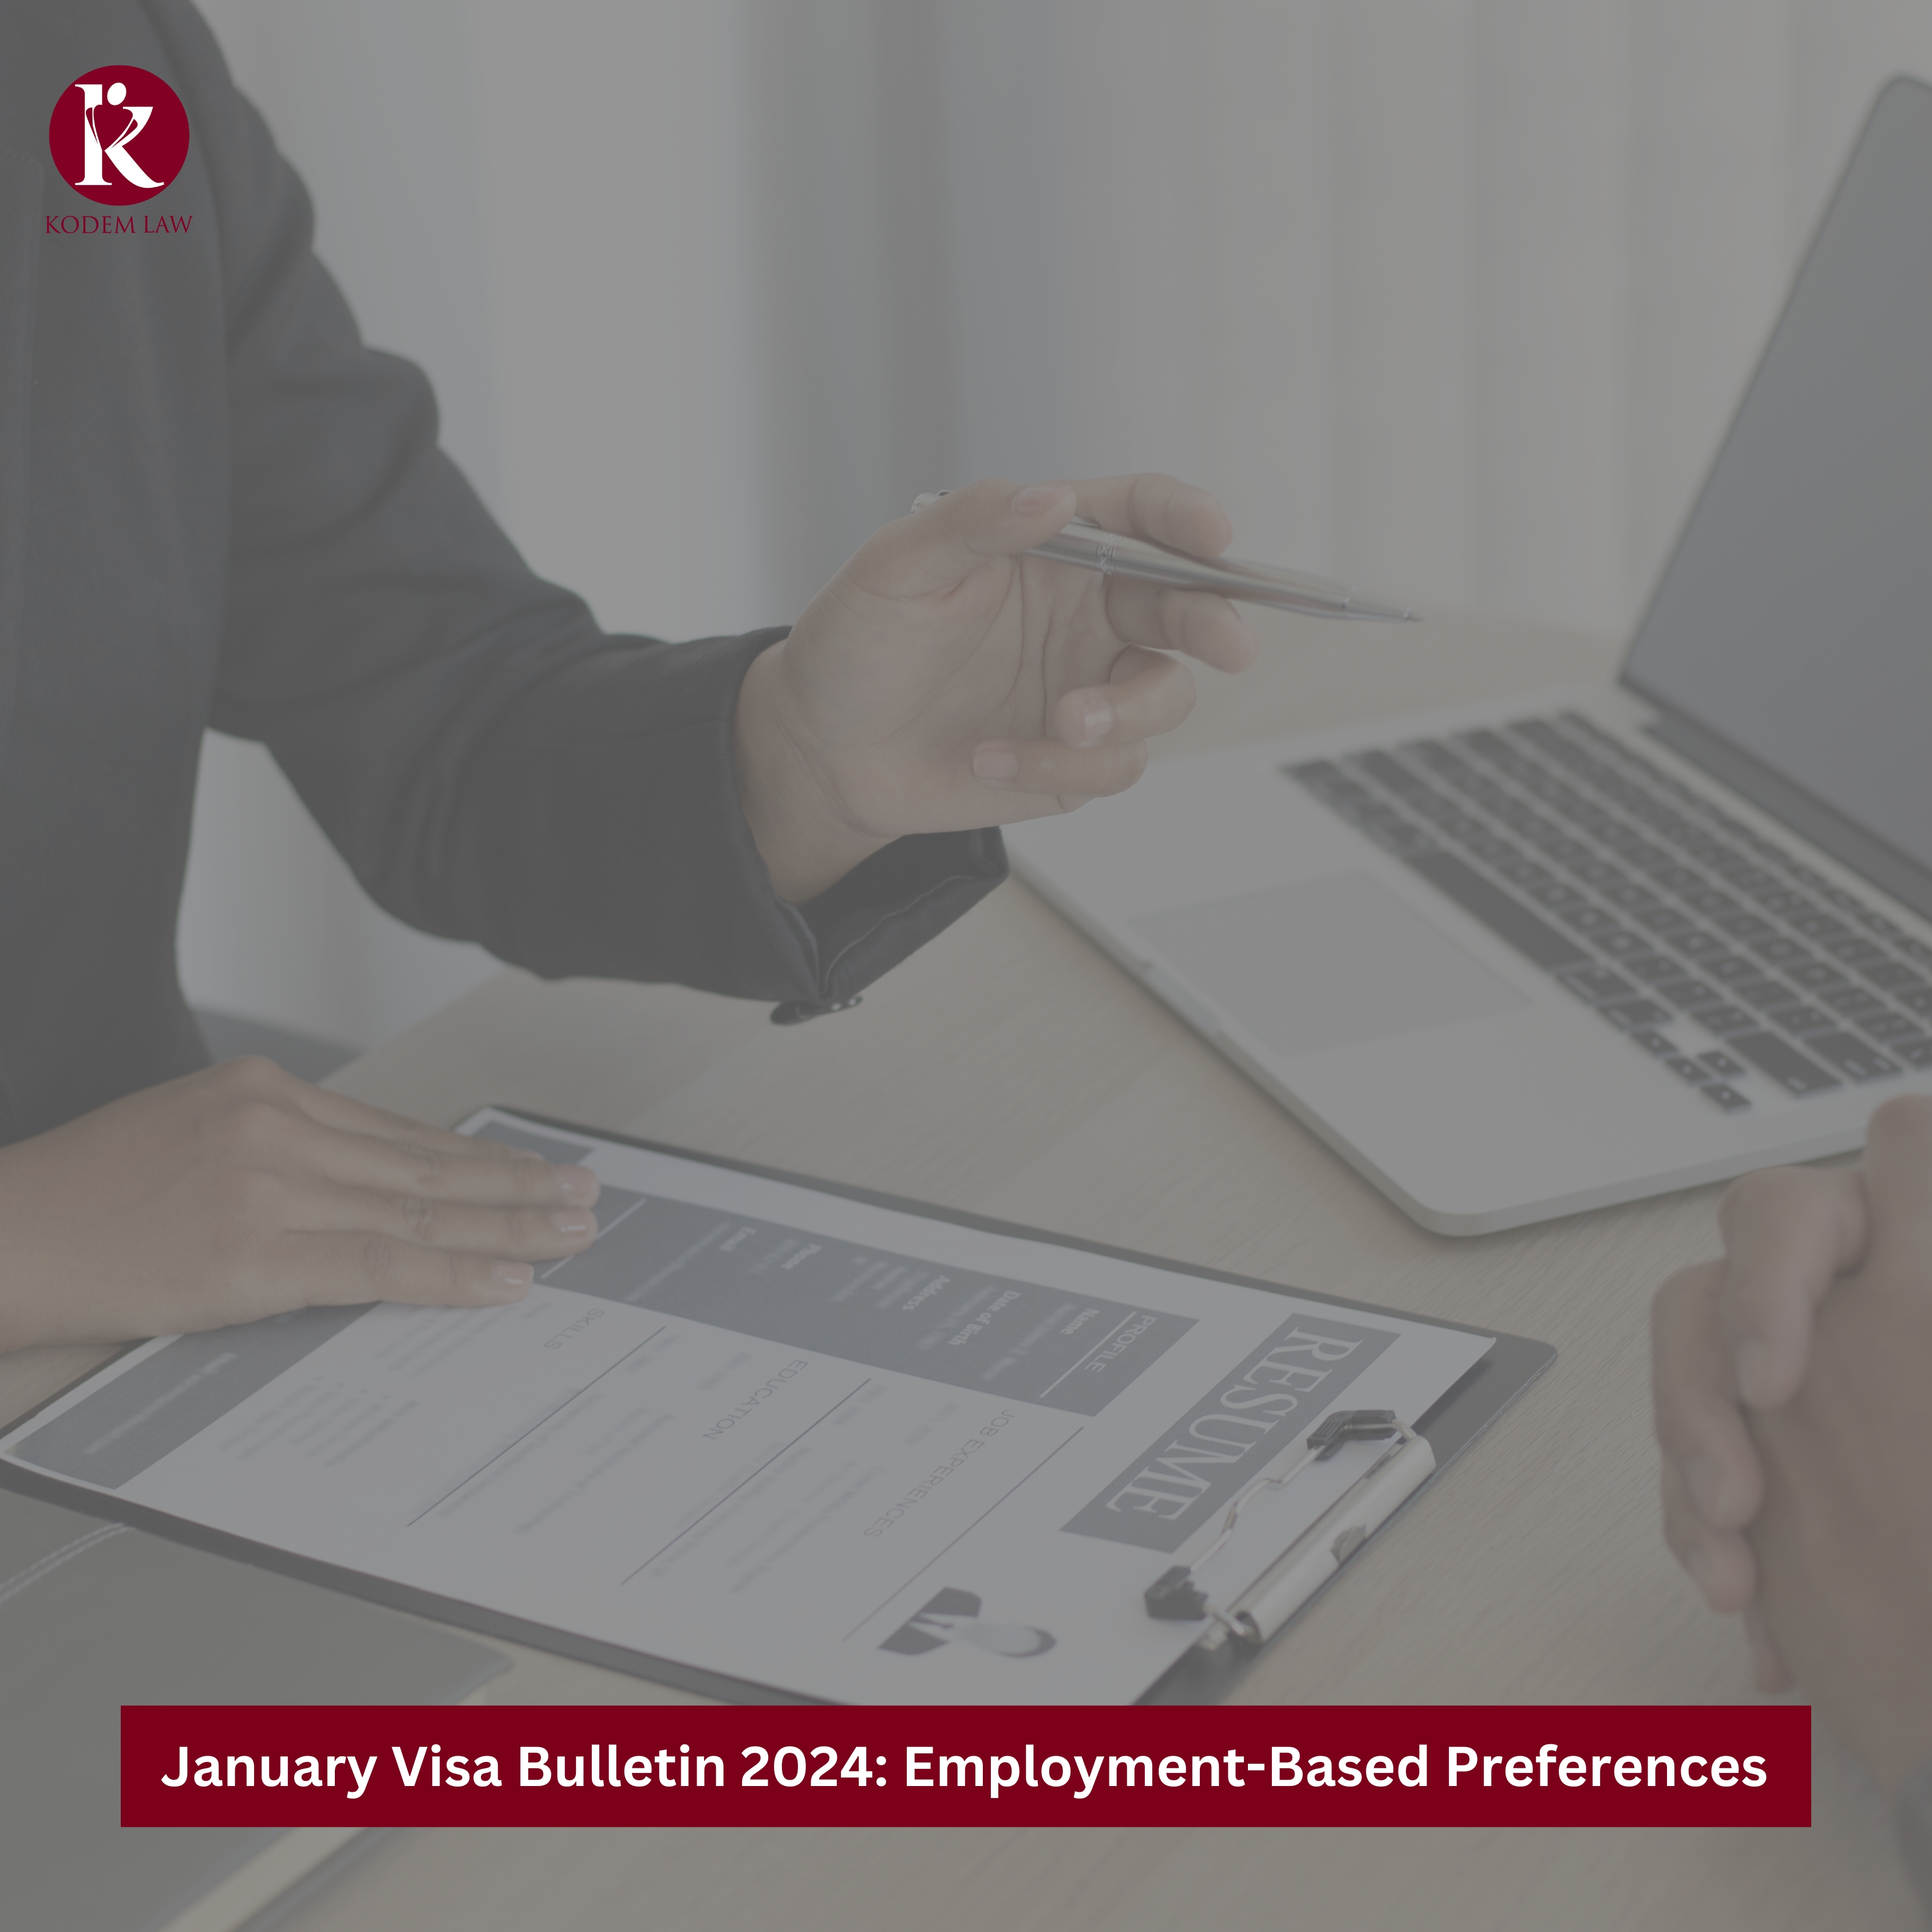 January Visa Bulletin 2024 Employment-Based Preferences